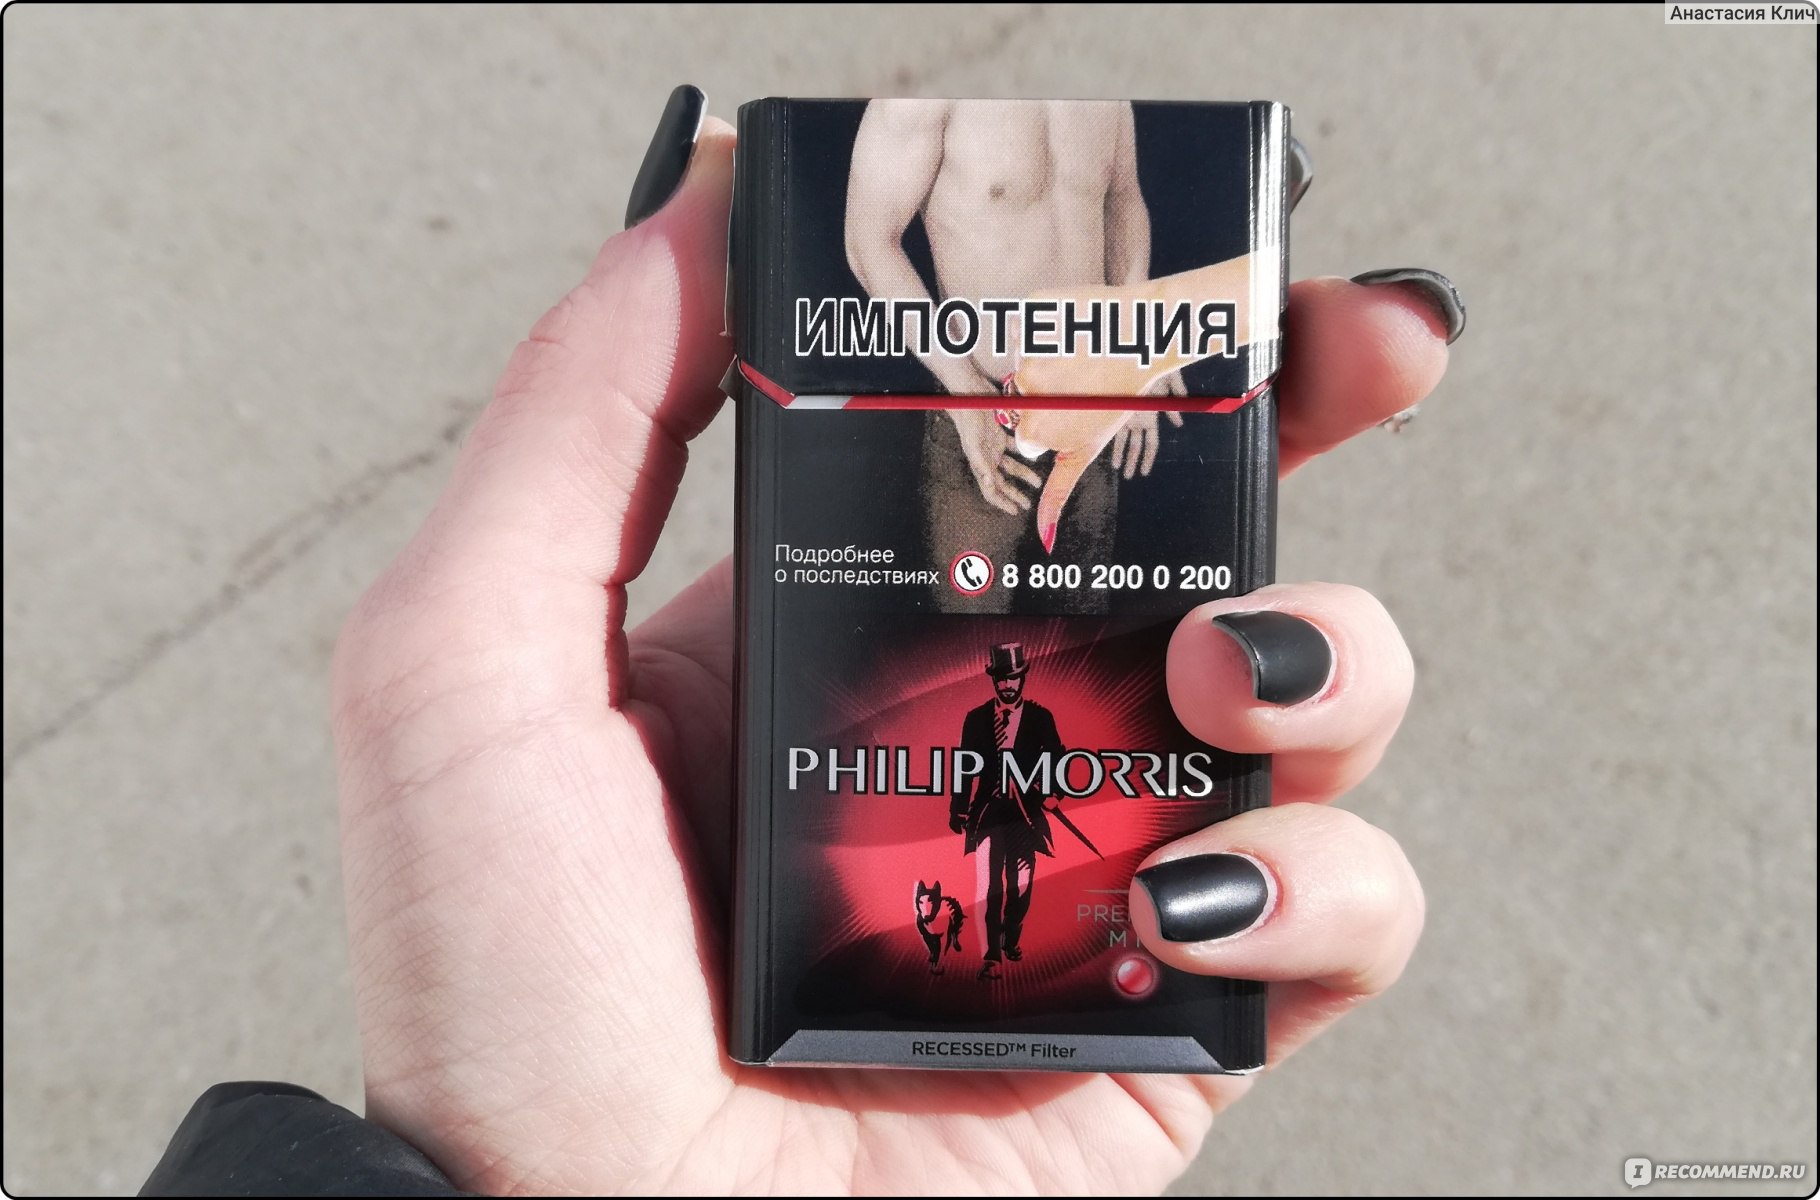 Филип моррис с кнопкой вкусы. Сигареты Philip Morris exotic. Филип Морис премиум микс. Сигареты Филип Моррис микс.